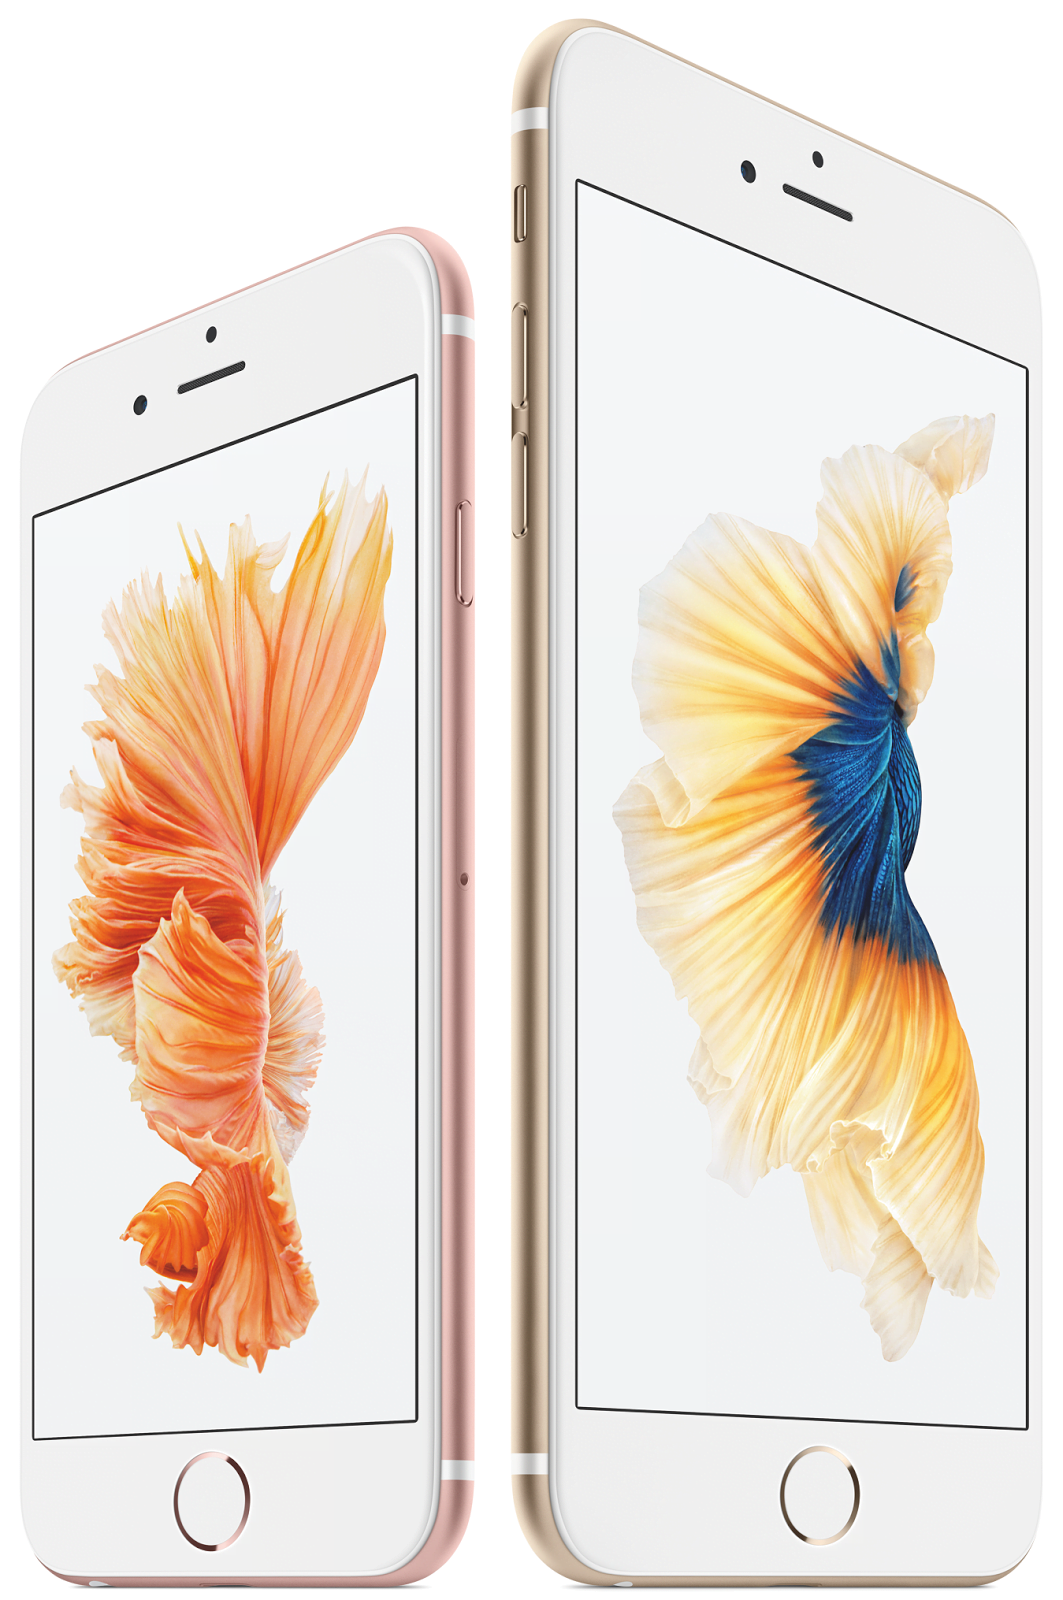 iPhone6s 6splus | It's here now, the iPhone 6s & iPhone 6s Plus | Bond High Plus